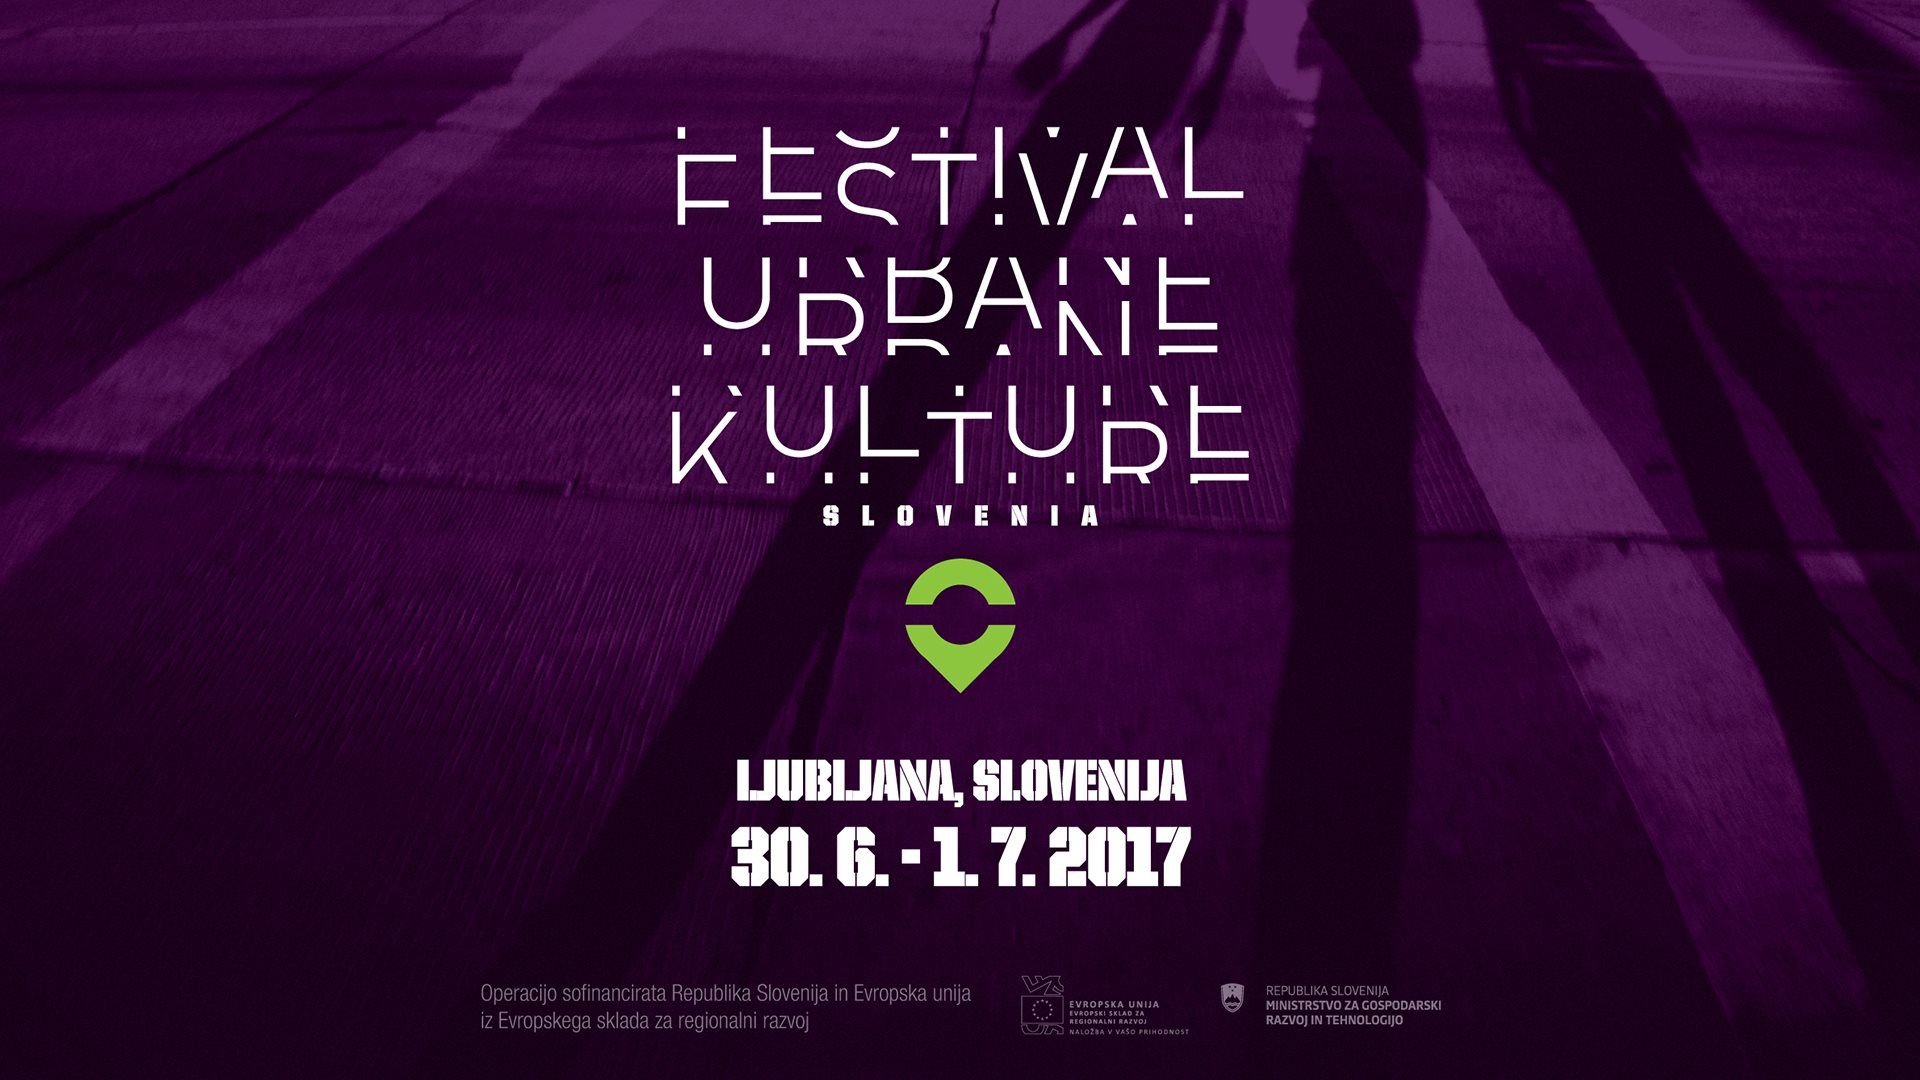 Urban culture festival